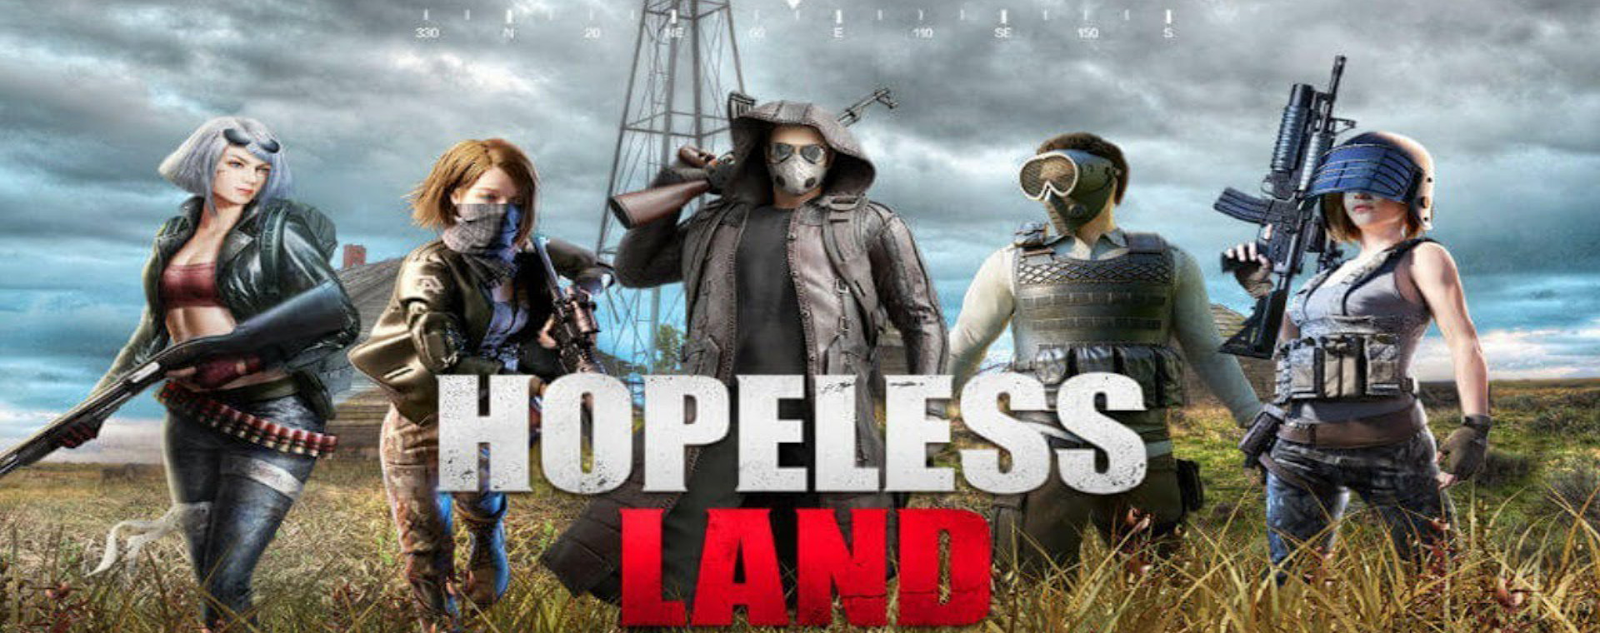 hopless land 2